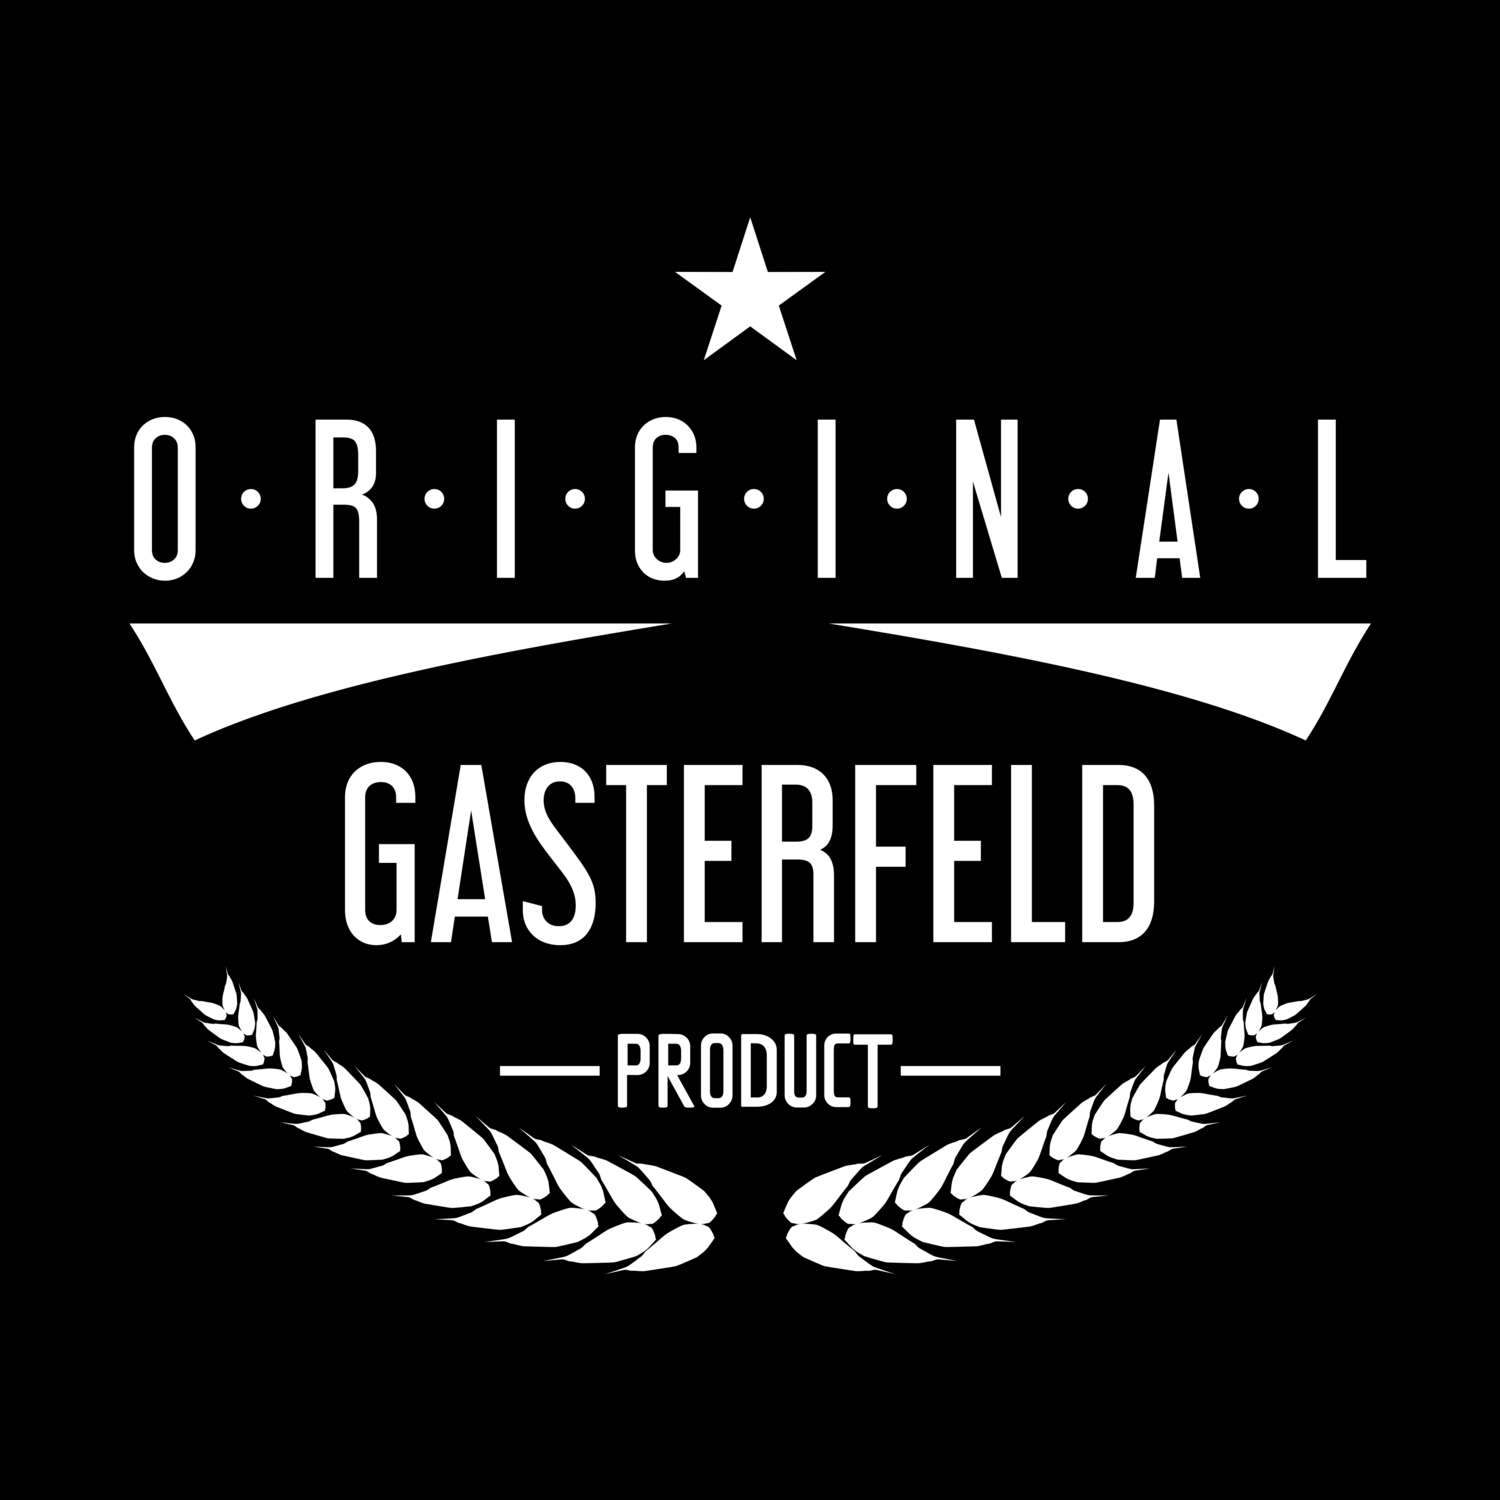 Gasterfeld T-Shirt »Original Product«